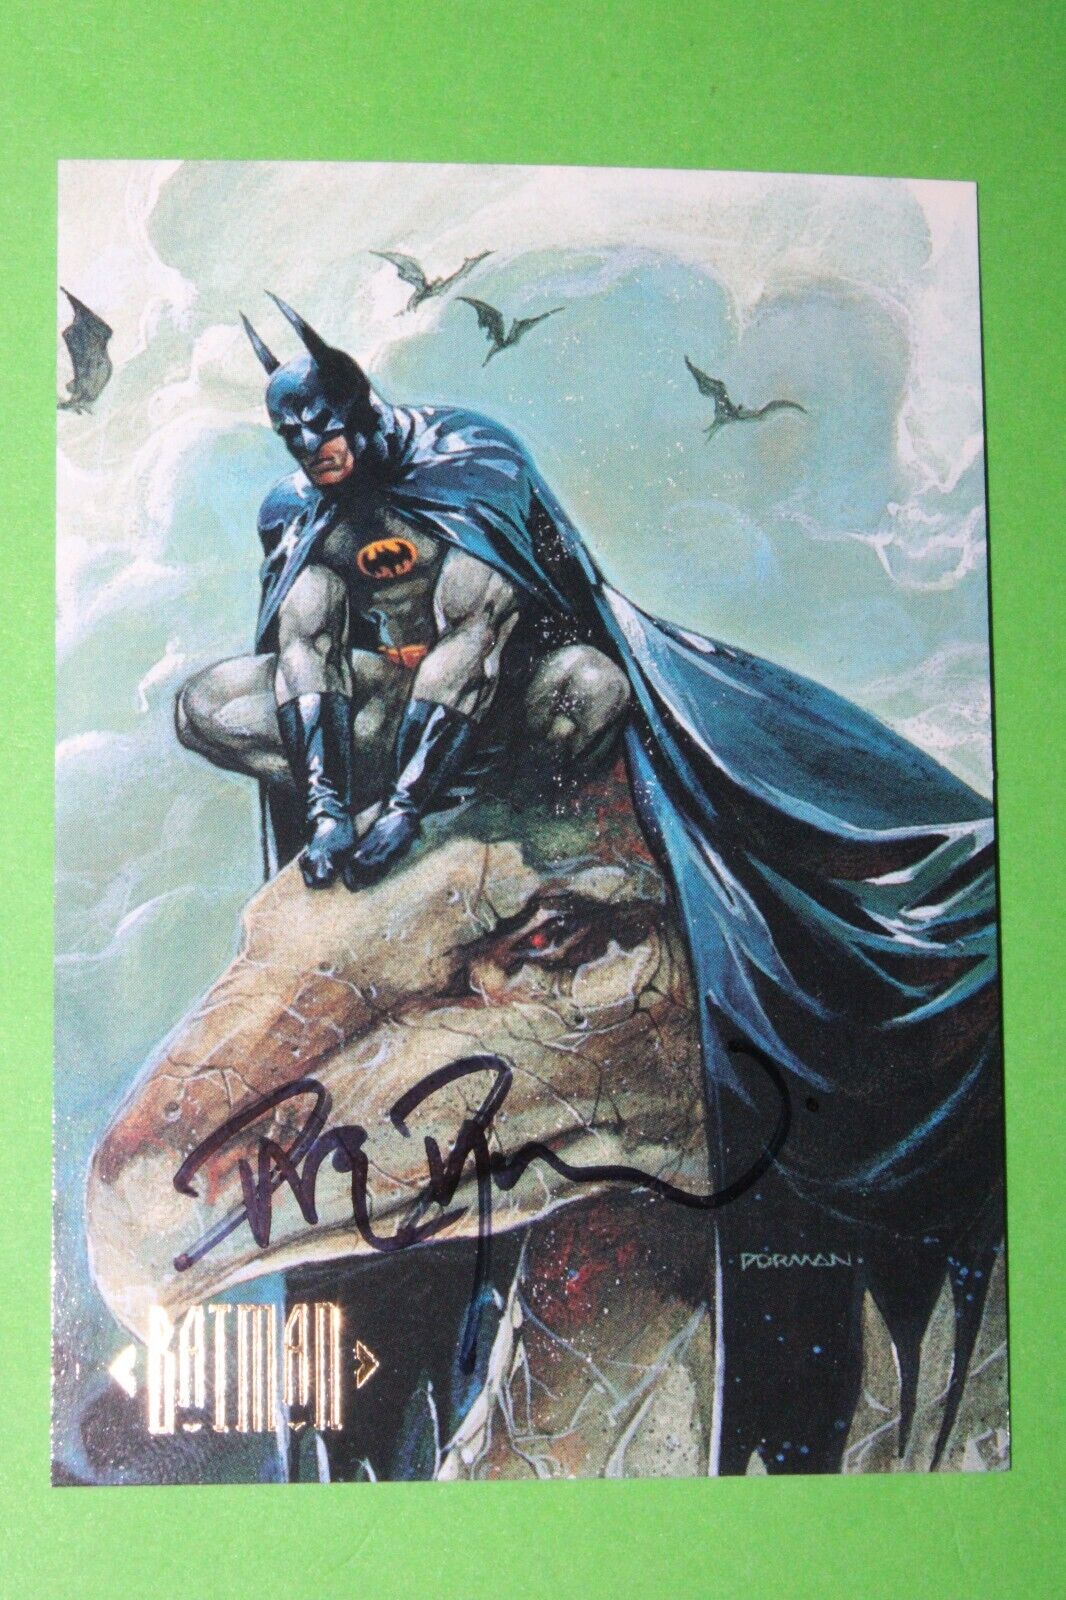 1994 DC MASTER SERIES SIGNED BATMAN #28 CARD DAVE DORMAN SIGNATURE